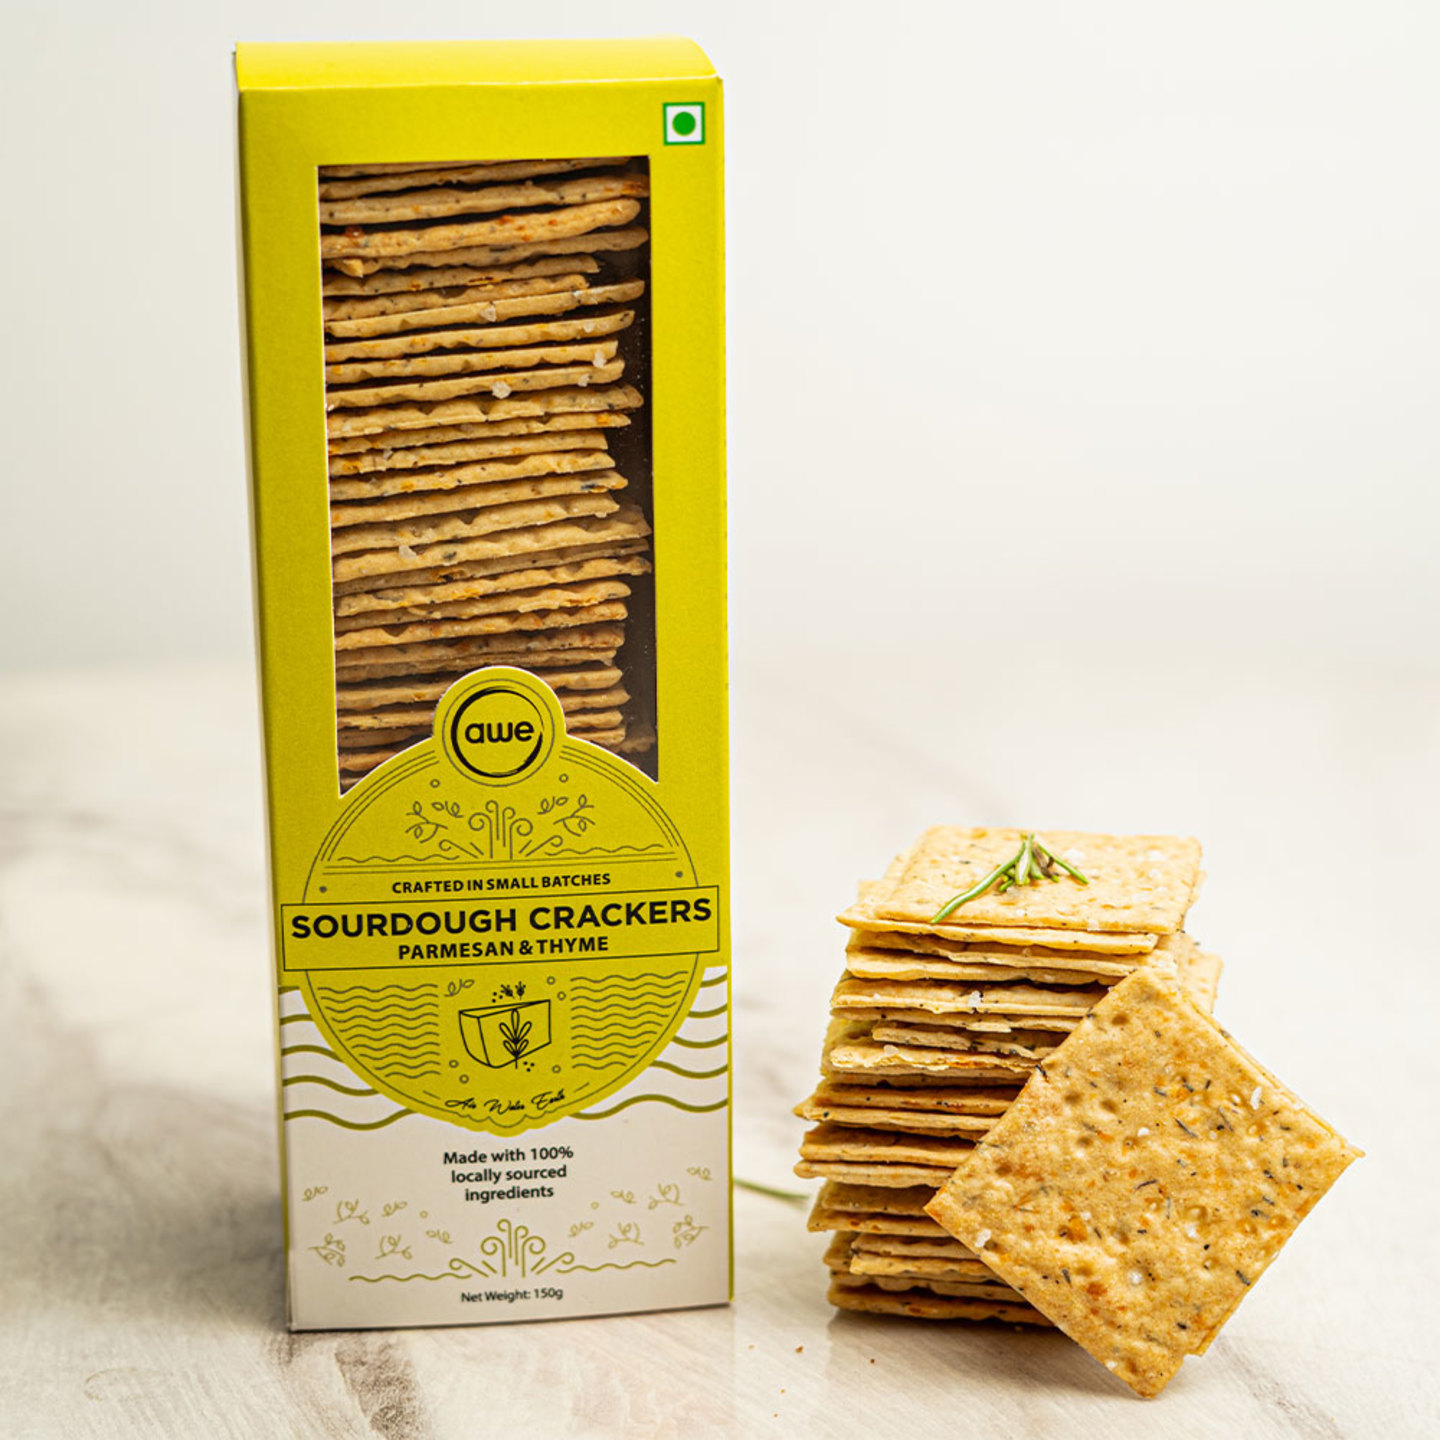 Parmesan & Thyme Sourdough Crackers